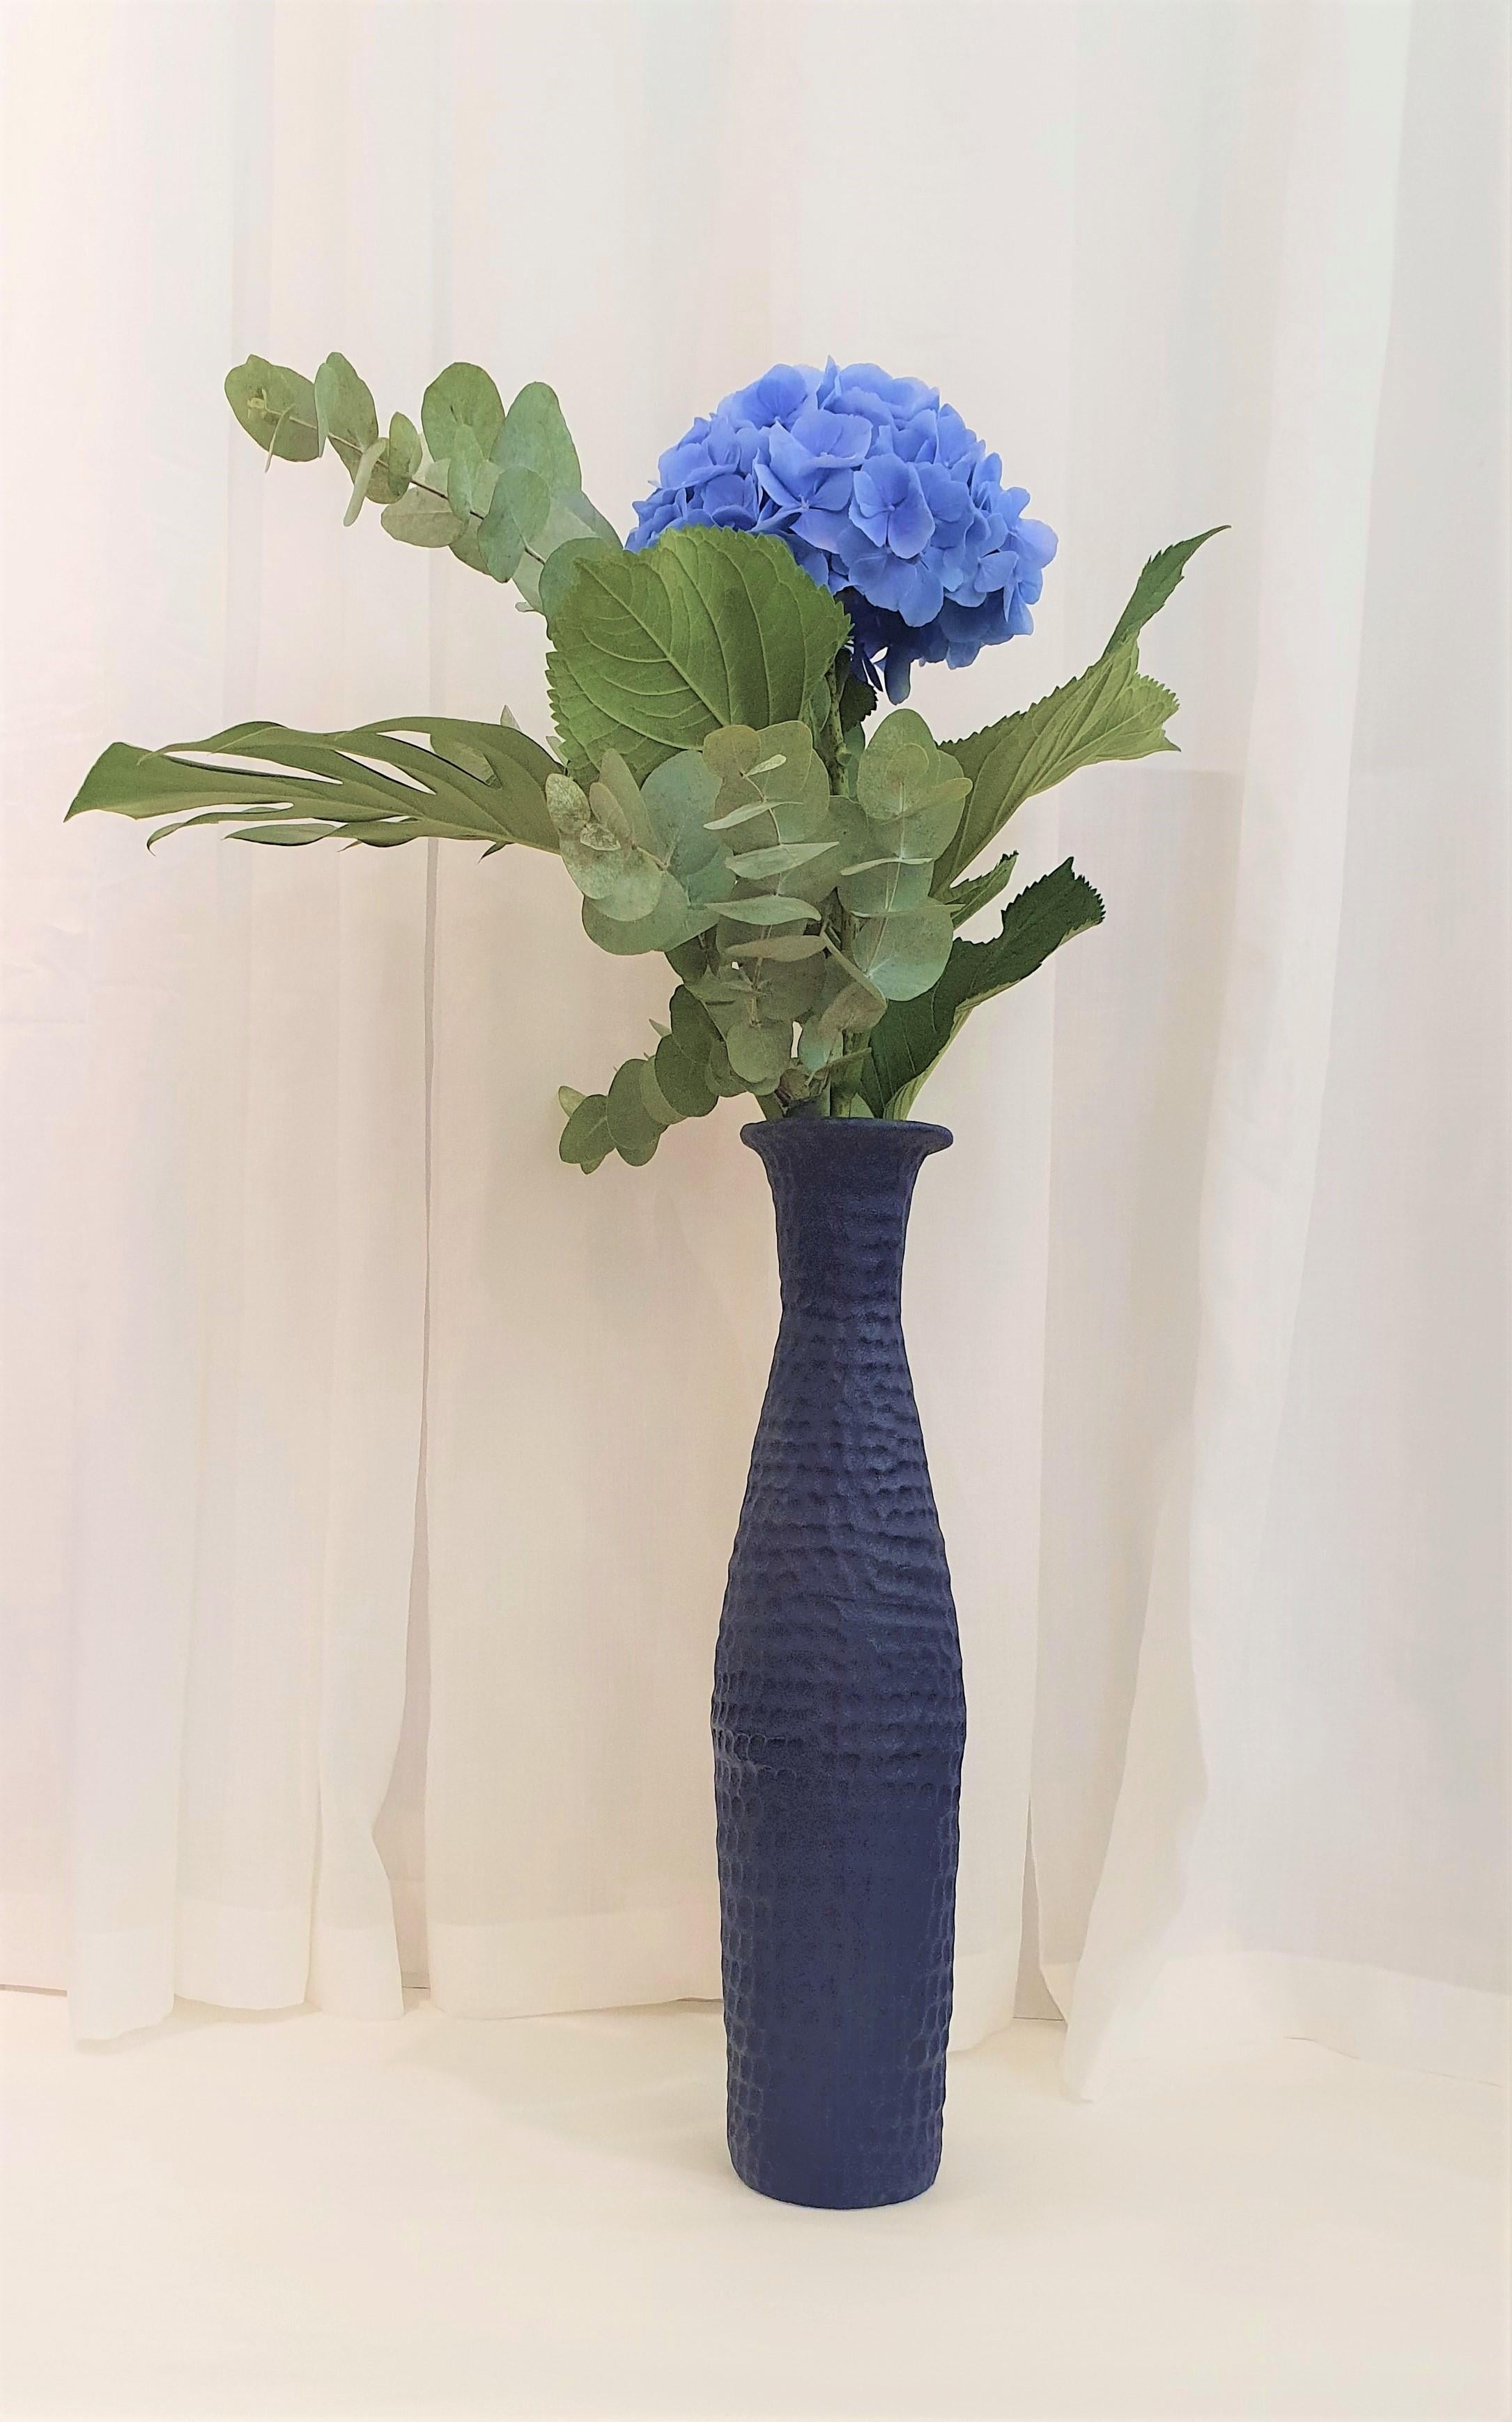 Enameled 21st Century Baltic Blue Matt Vase by Ceramica Gatti, designer A. Anastasio For Sale